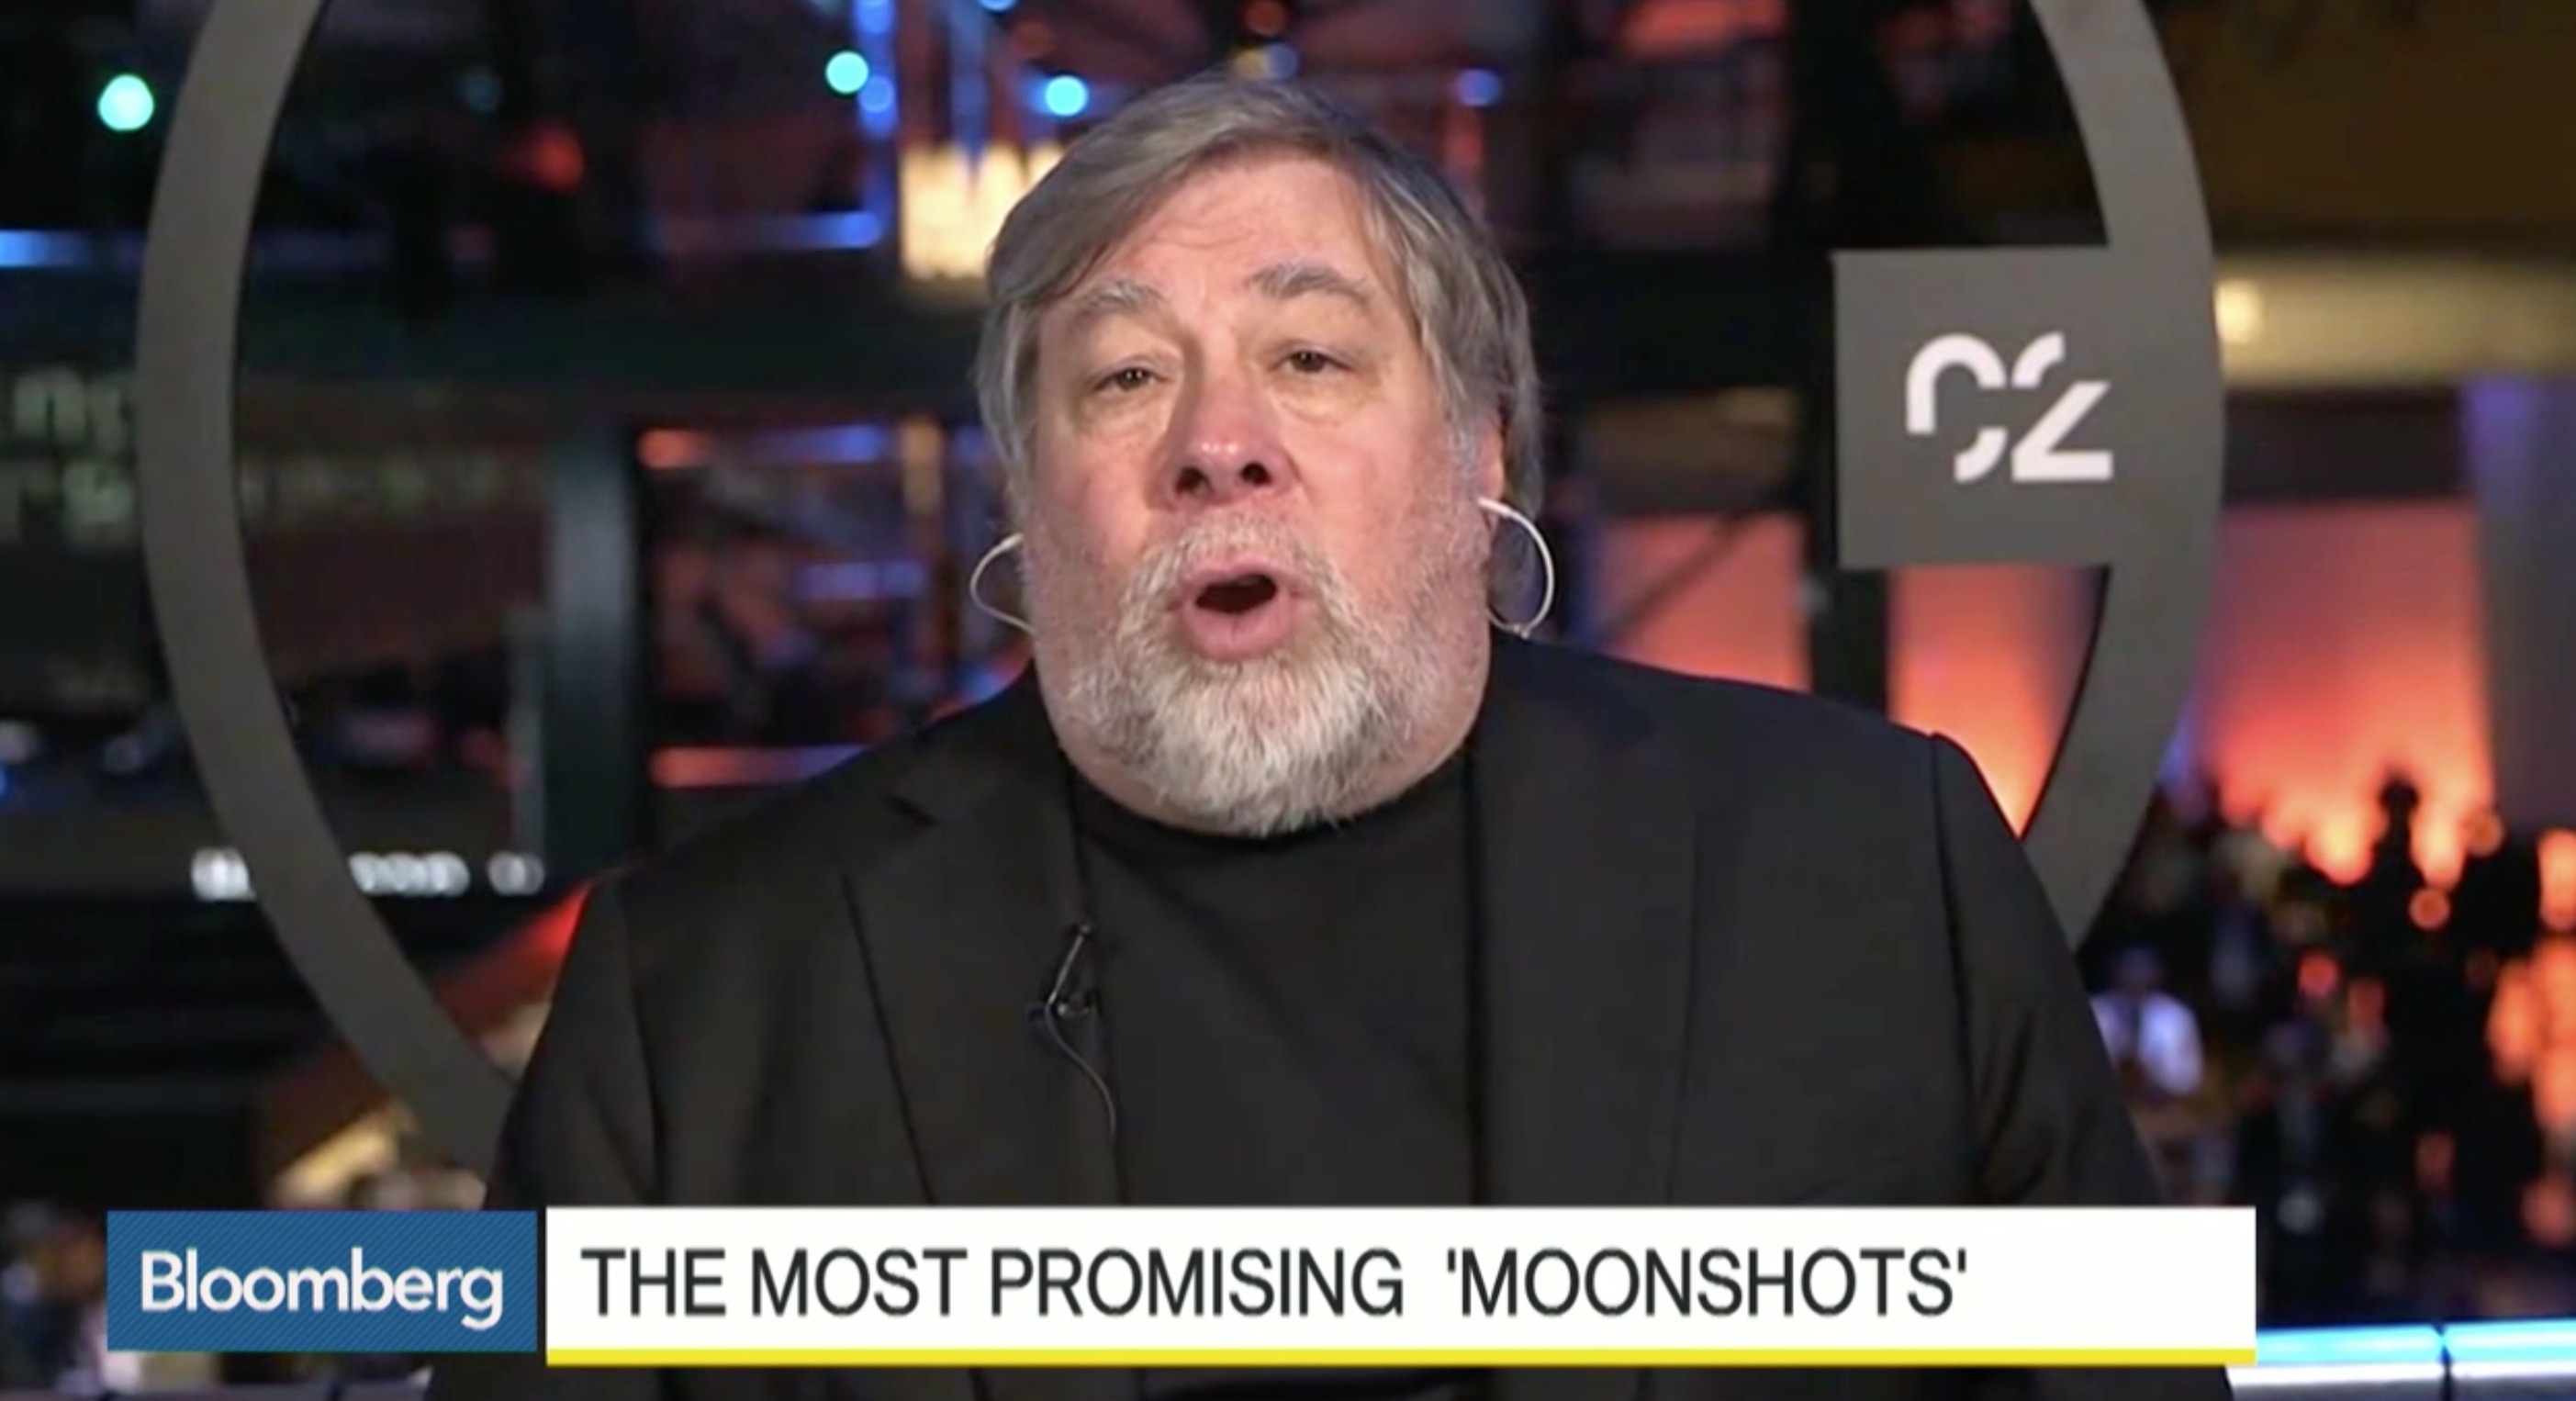 Steve Wozniak on Tesla Innovation